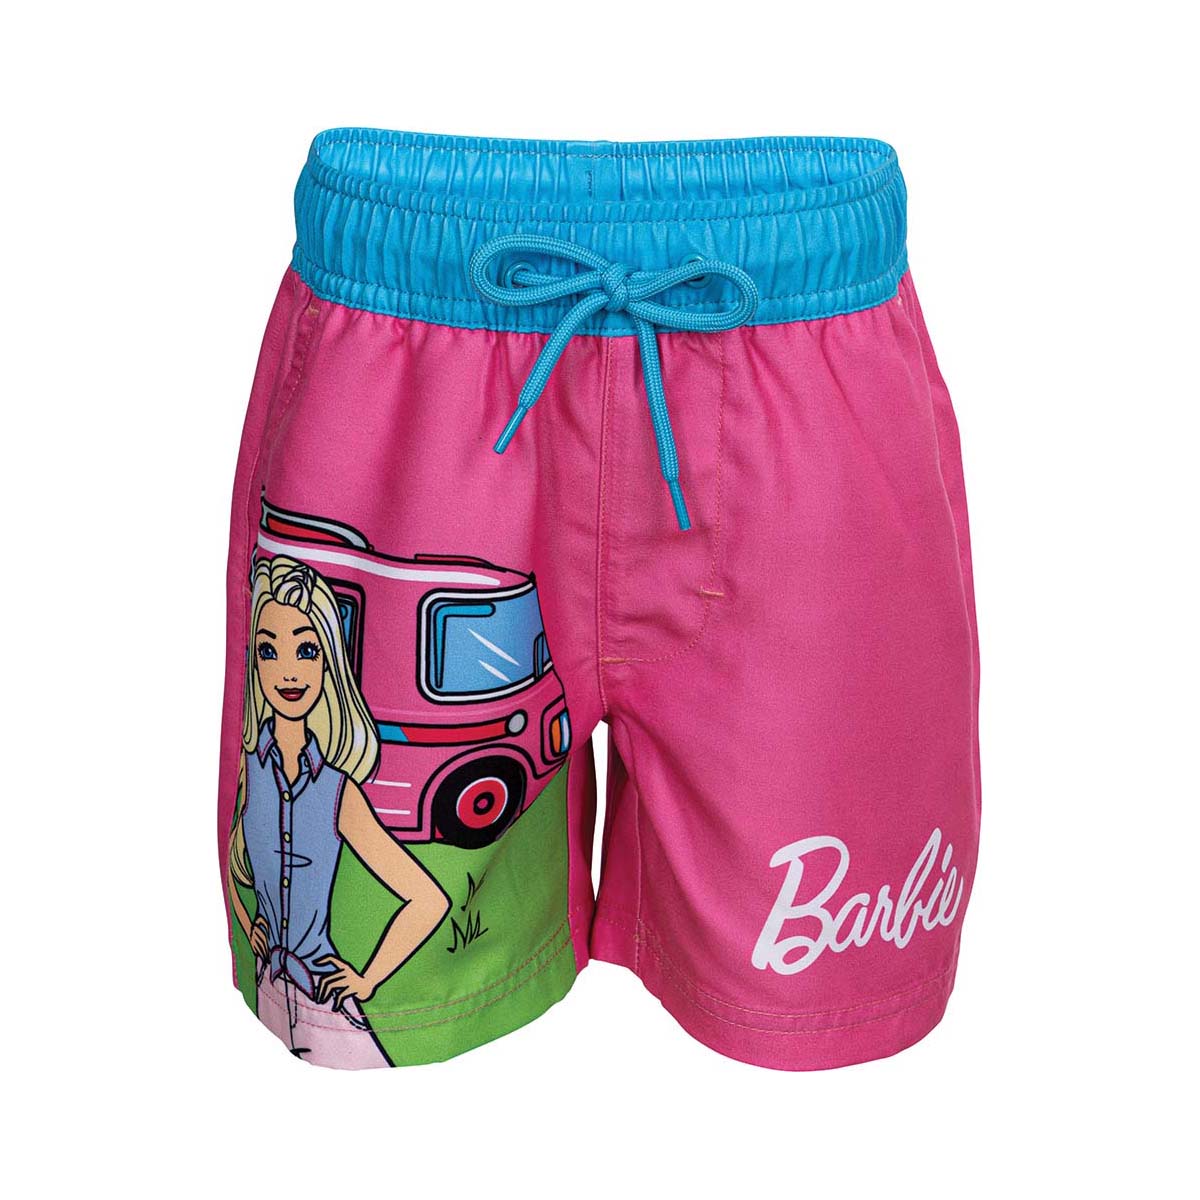 Barbie Kids' Shorts Pink 5